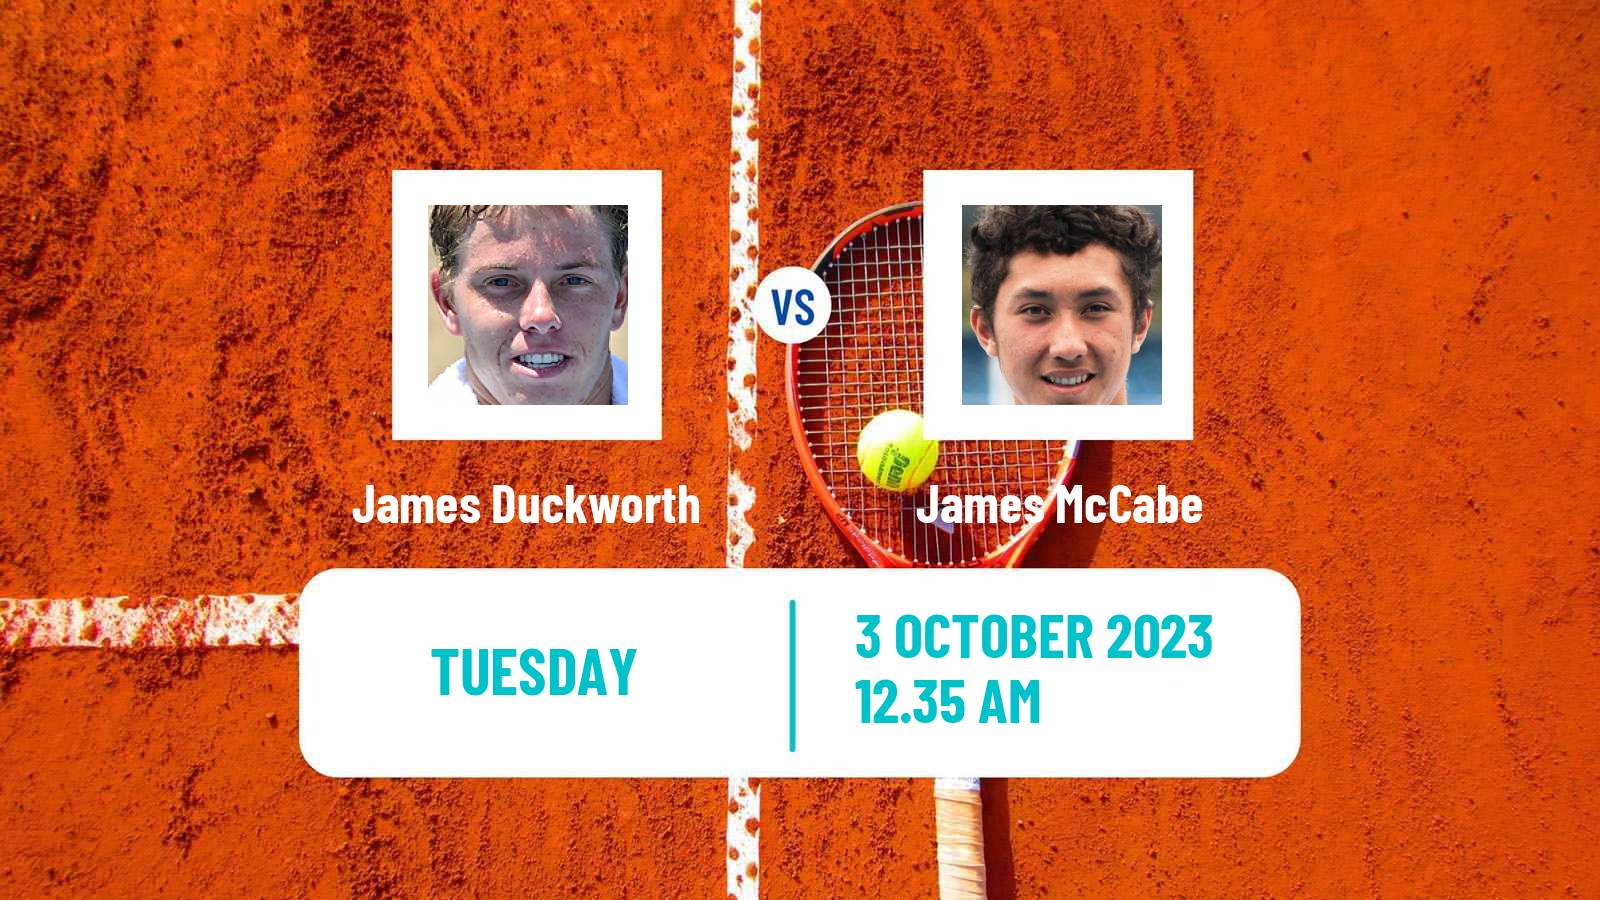 Tennis ATP Shanghai James Duckworth - James McCabe